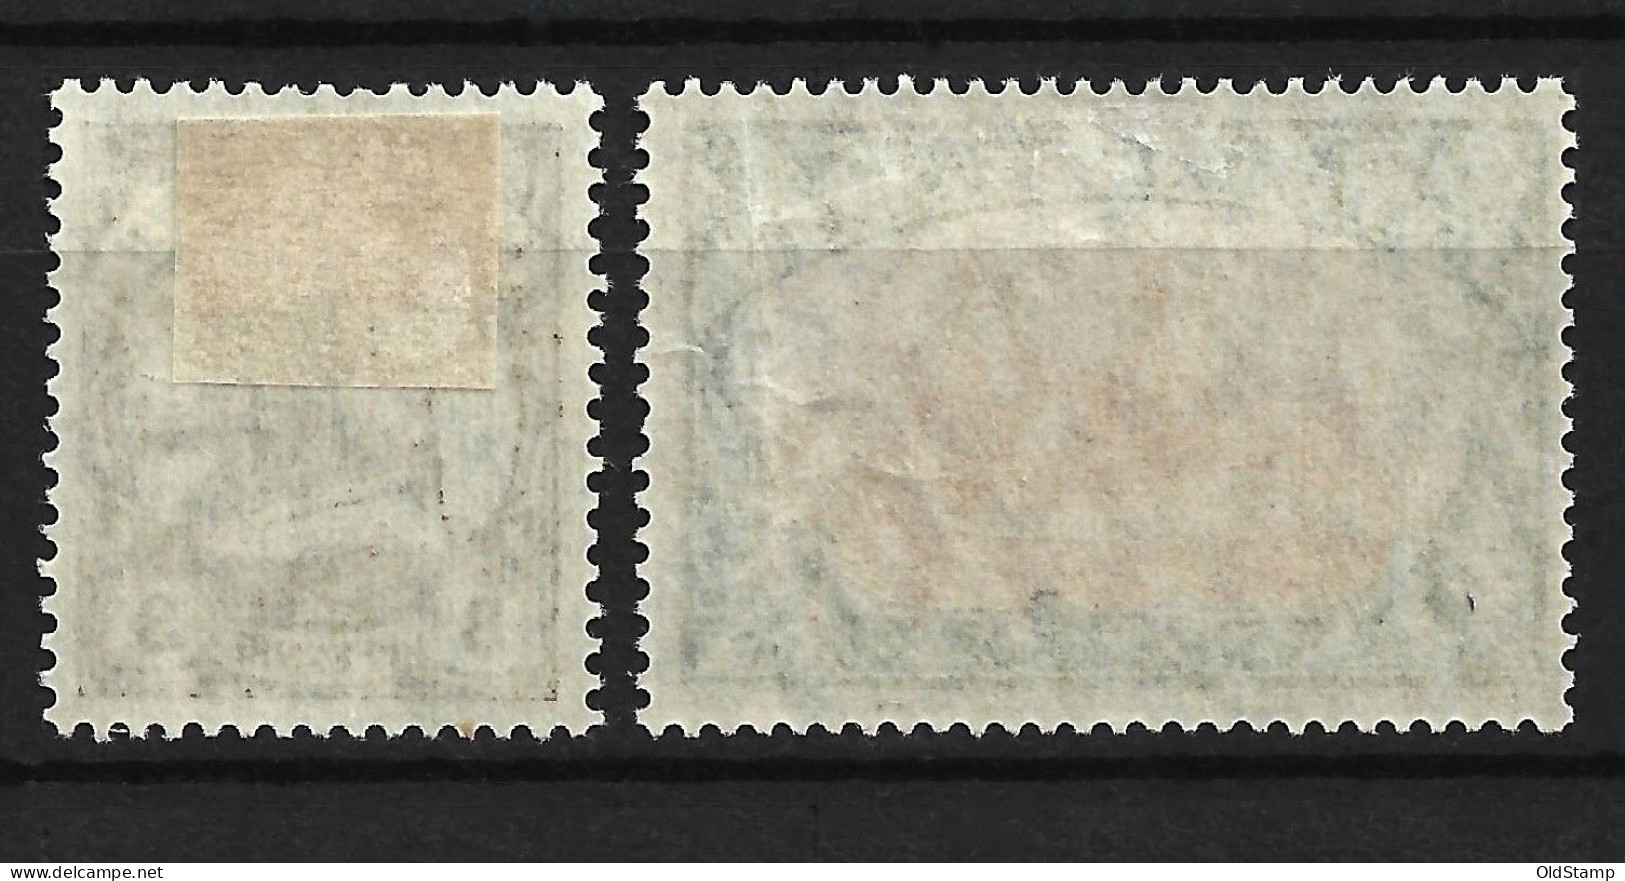 DR KOLONIEN Dt. MARSHALL-INSELN 1916 MLH * Mi.# 26-27 Full Set Kaizer Yachts Deutsches REICHPOST Stamps / Alemania - Islas Marshall